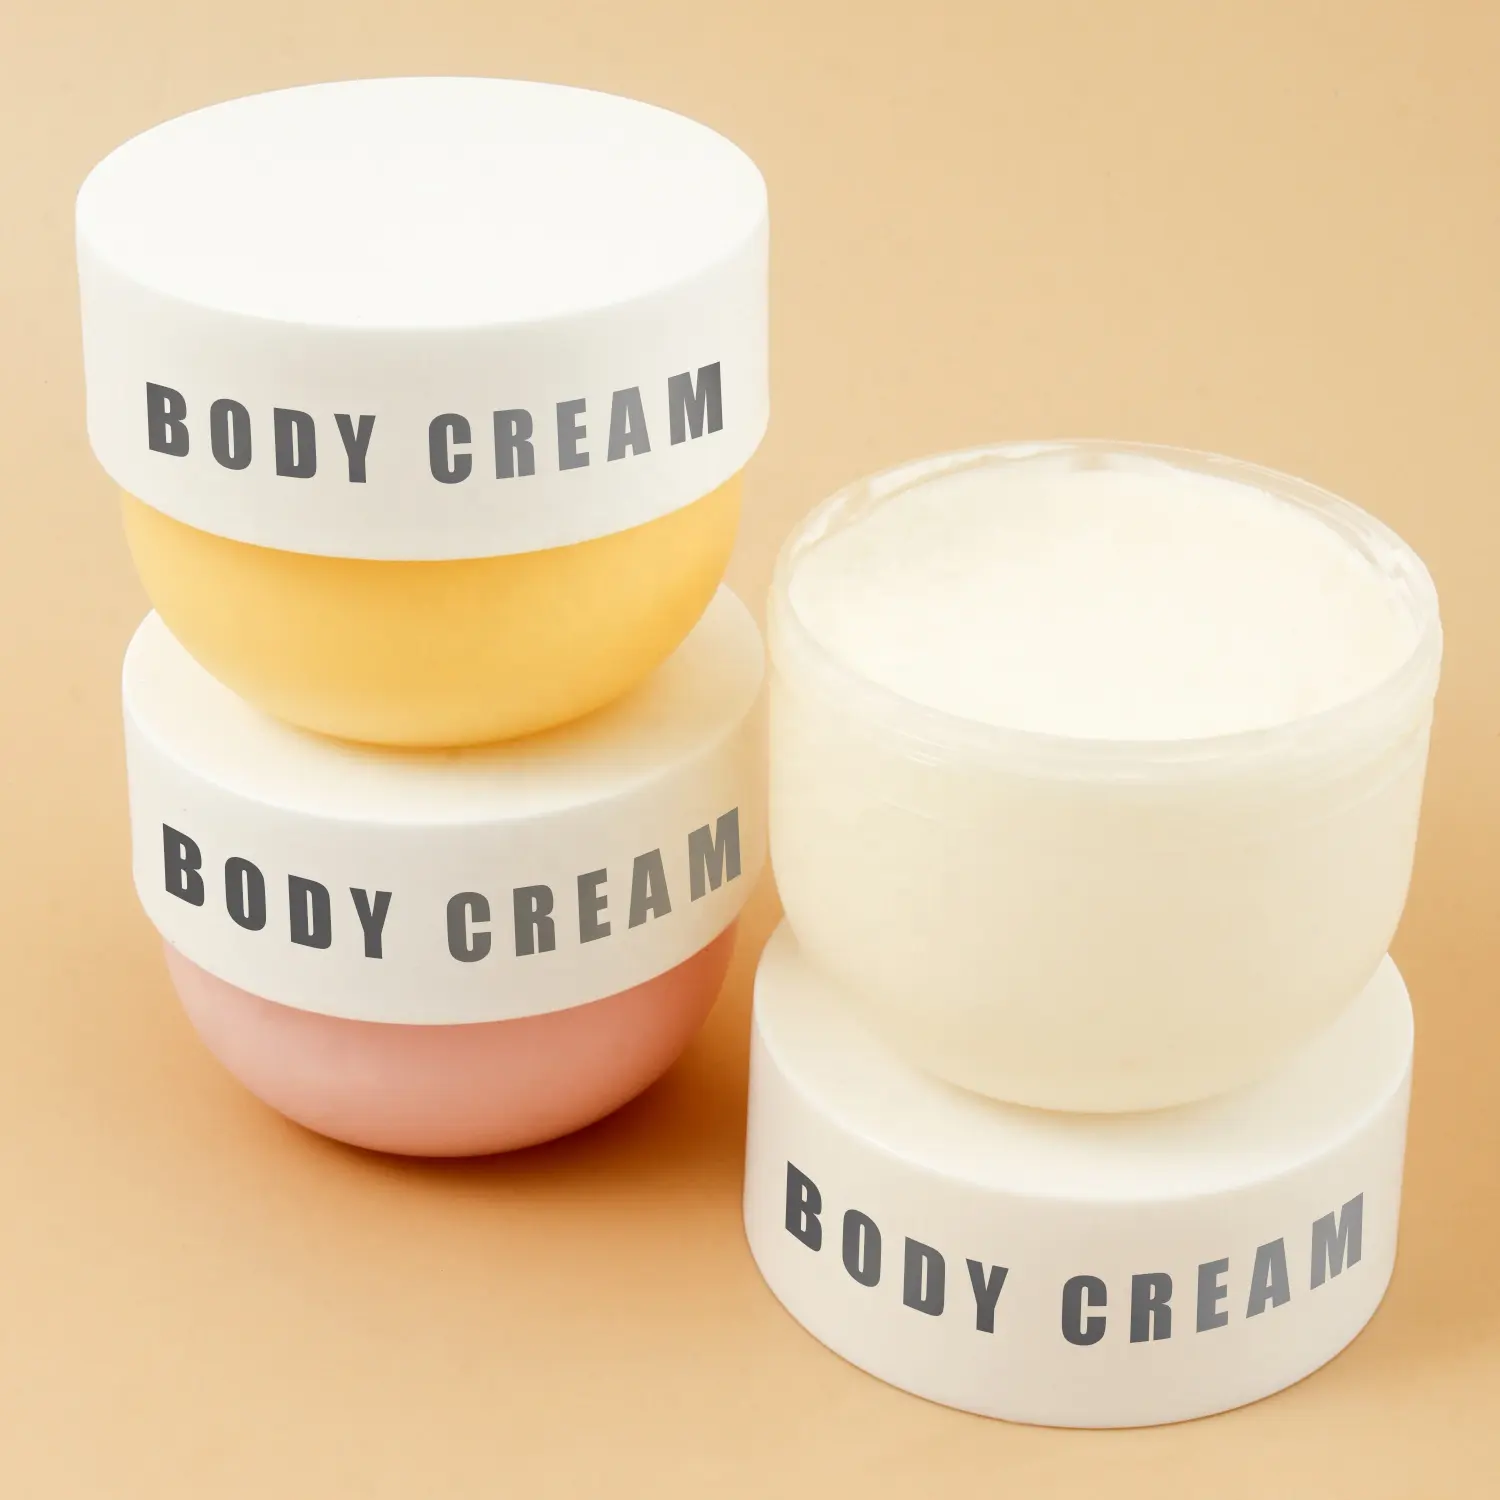 प्रकार का वृक्ष मक्खन शरीर मक्खन क्रीम निजी लेबल Moisturizer सूखी त्वचा के लिए महिलाओं थोक मॉइस्चराइजिंग लोशन शरीर लोशन क्रीम